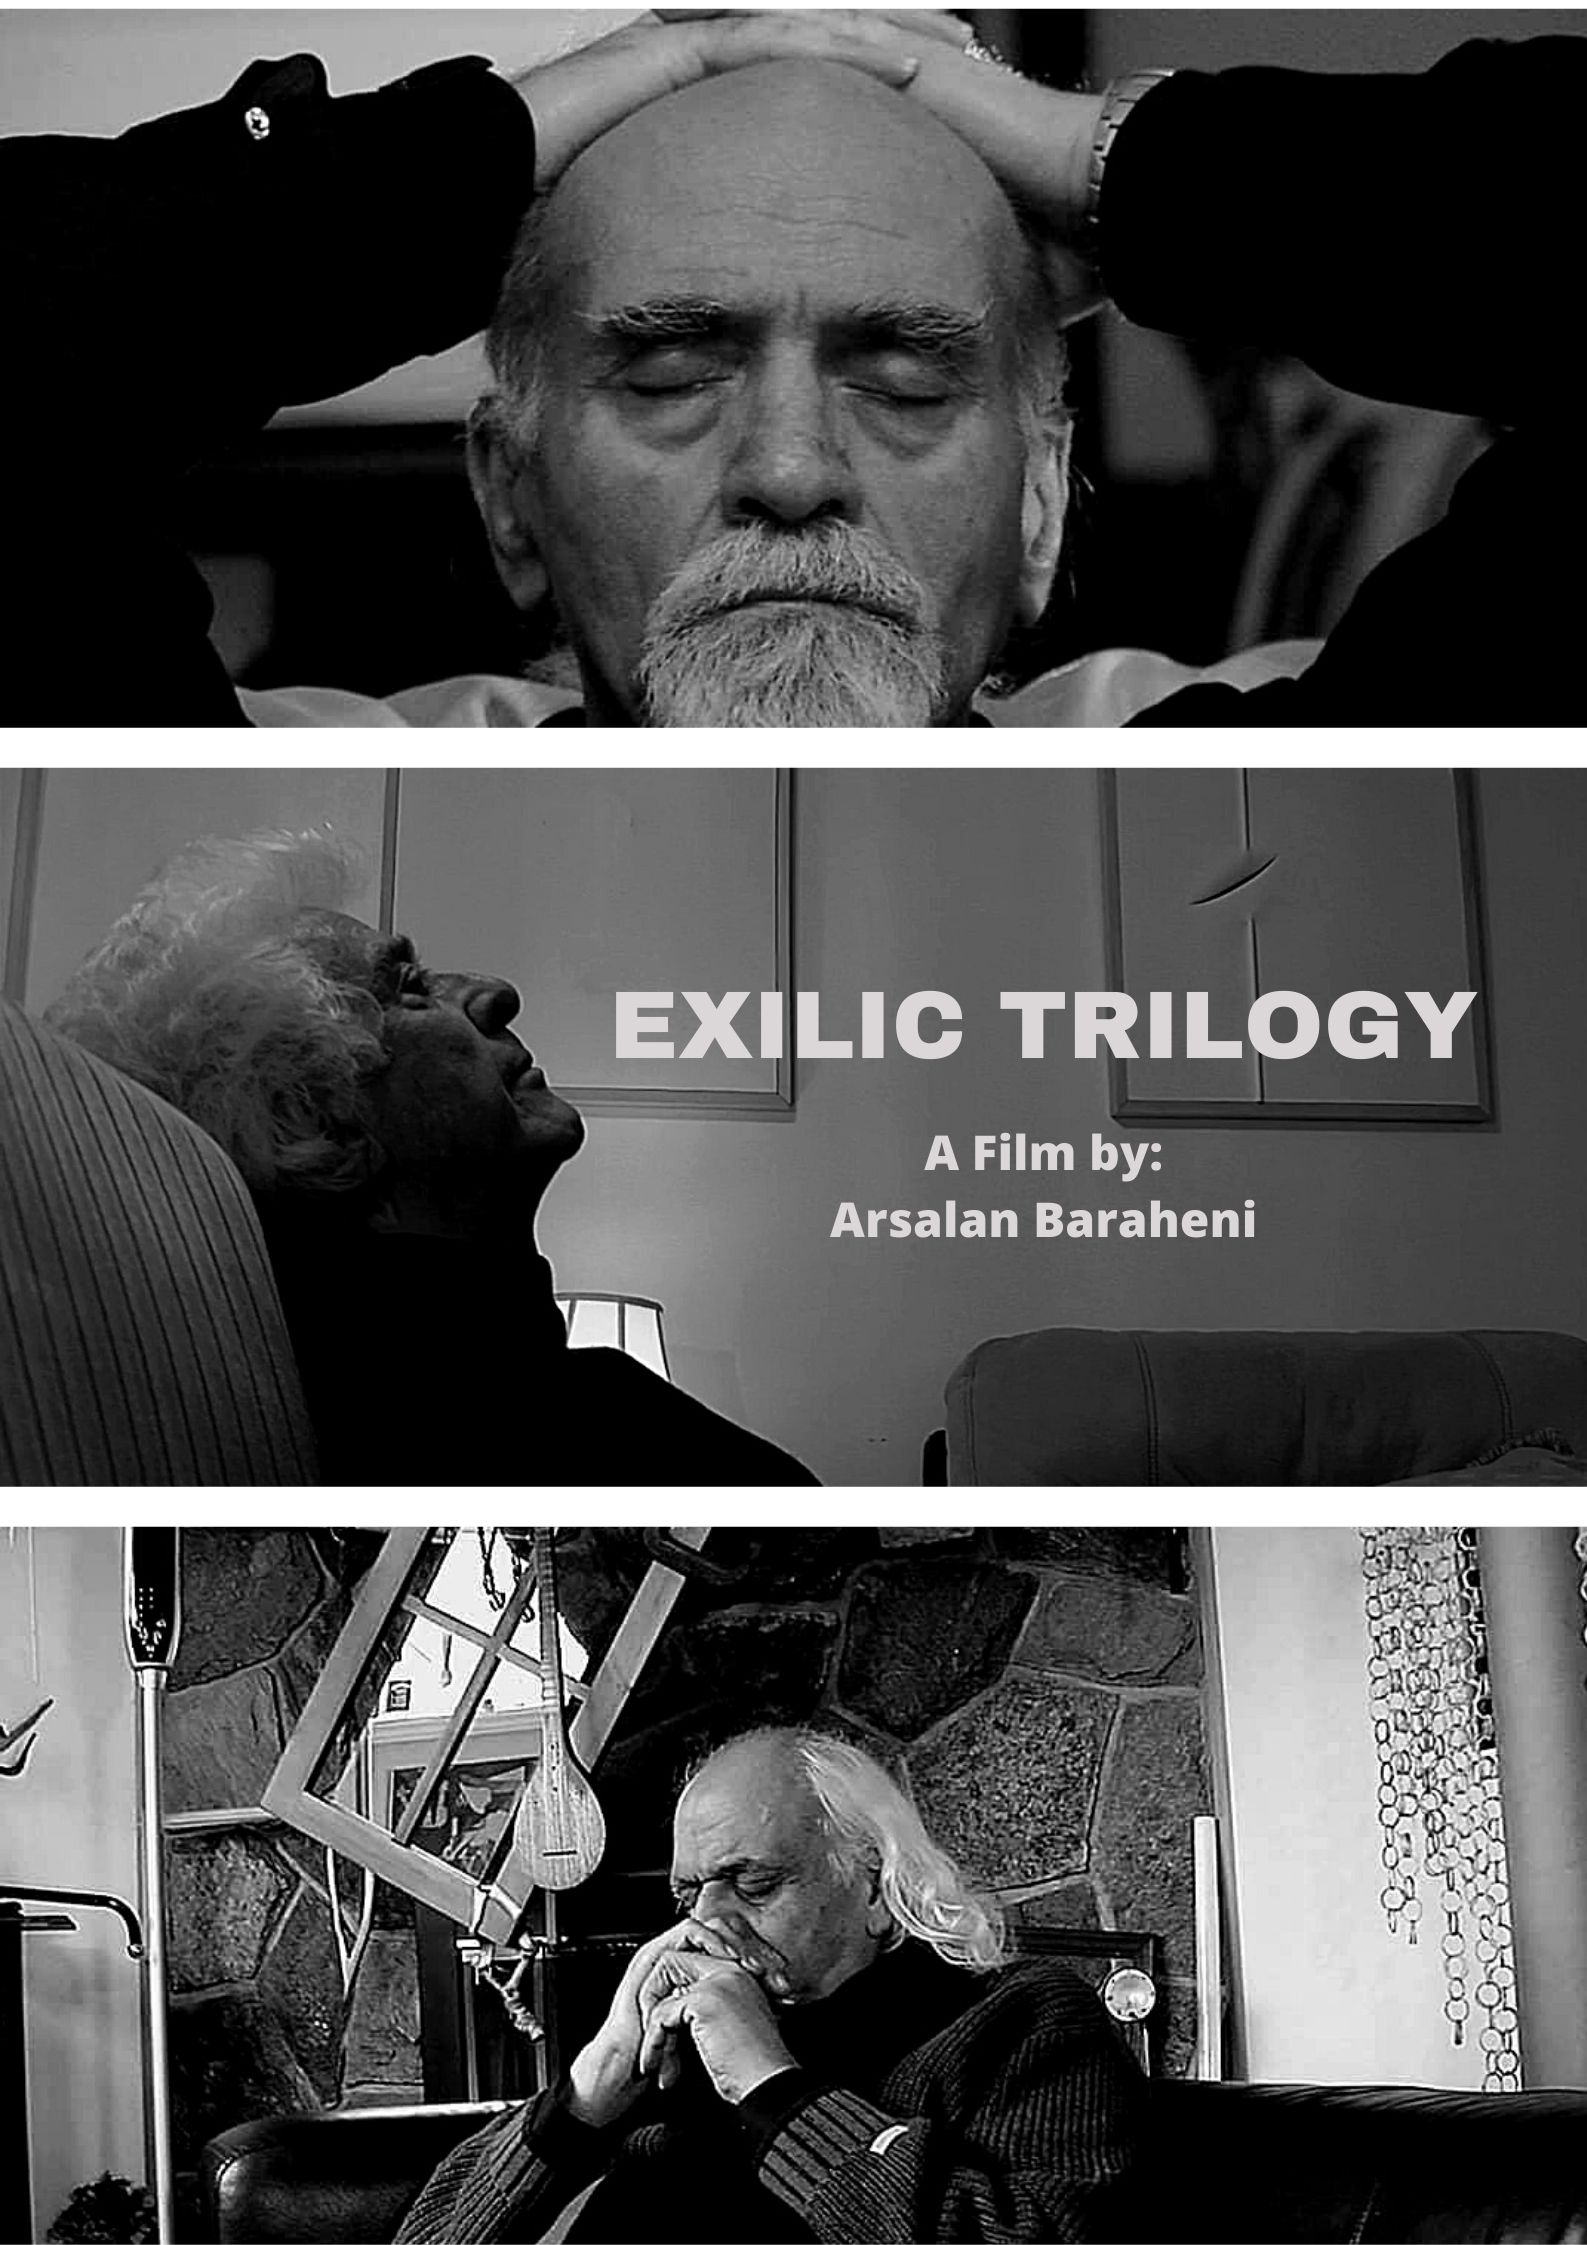 Exilic trilogy (2015)